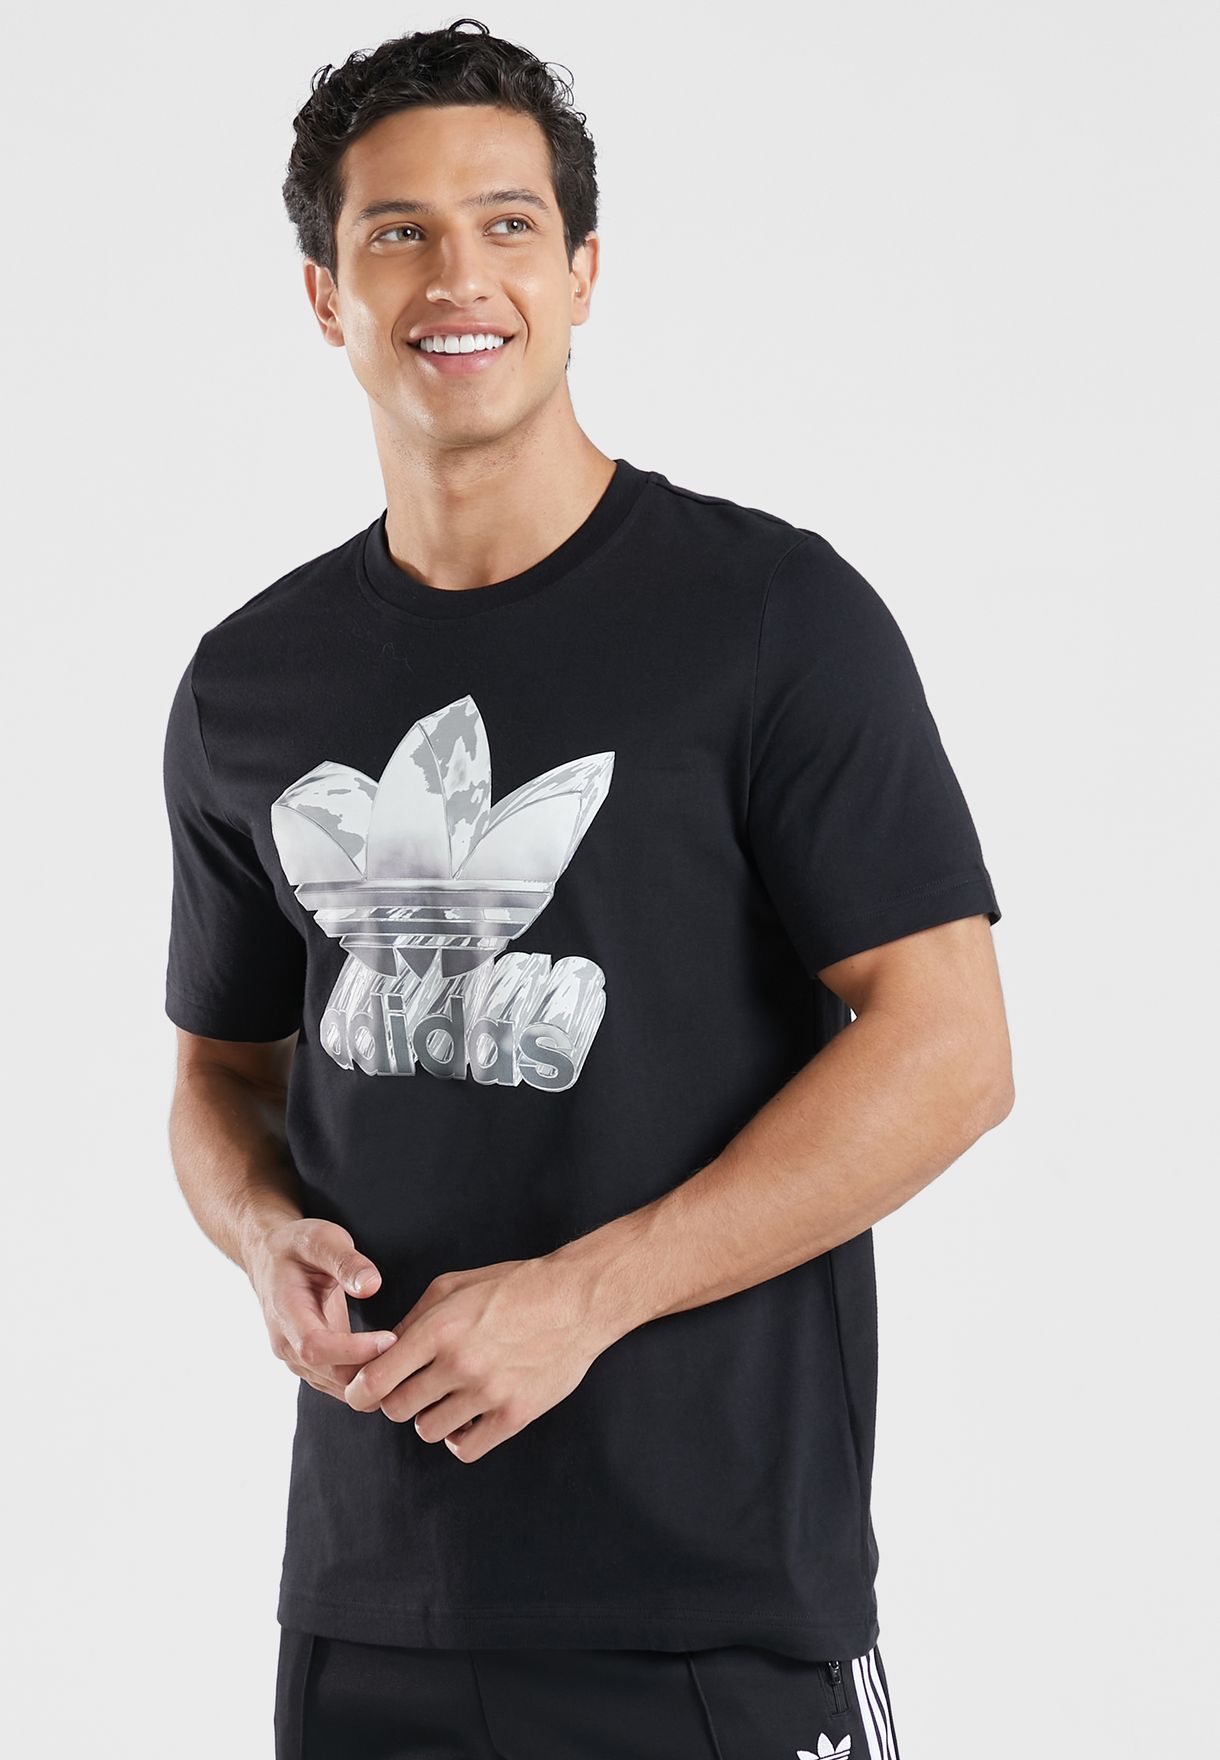 Rekive Graphic T-Shirt